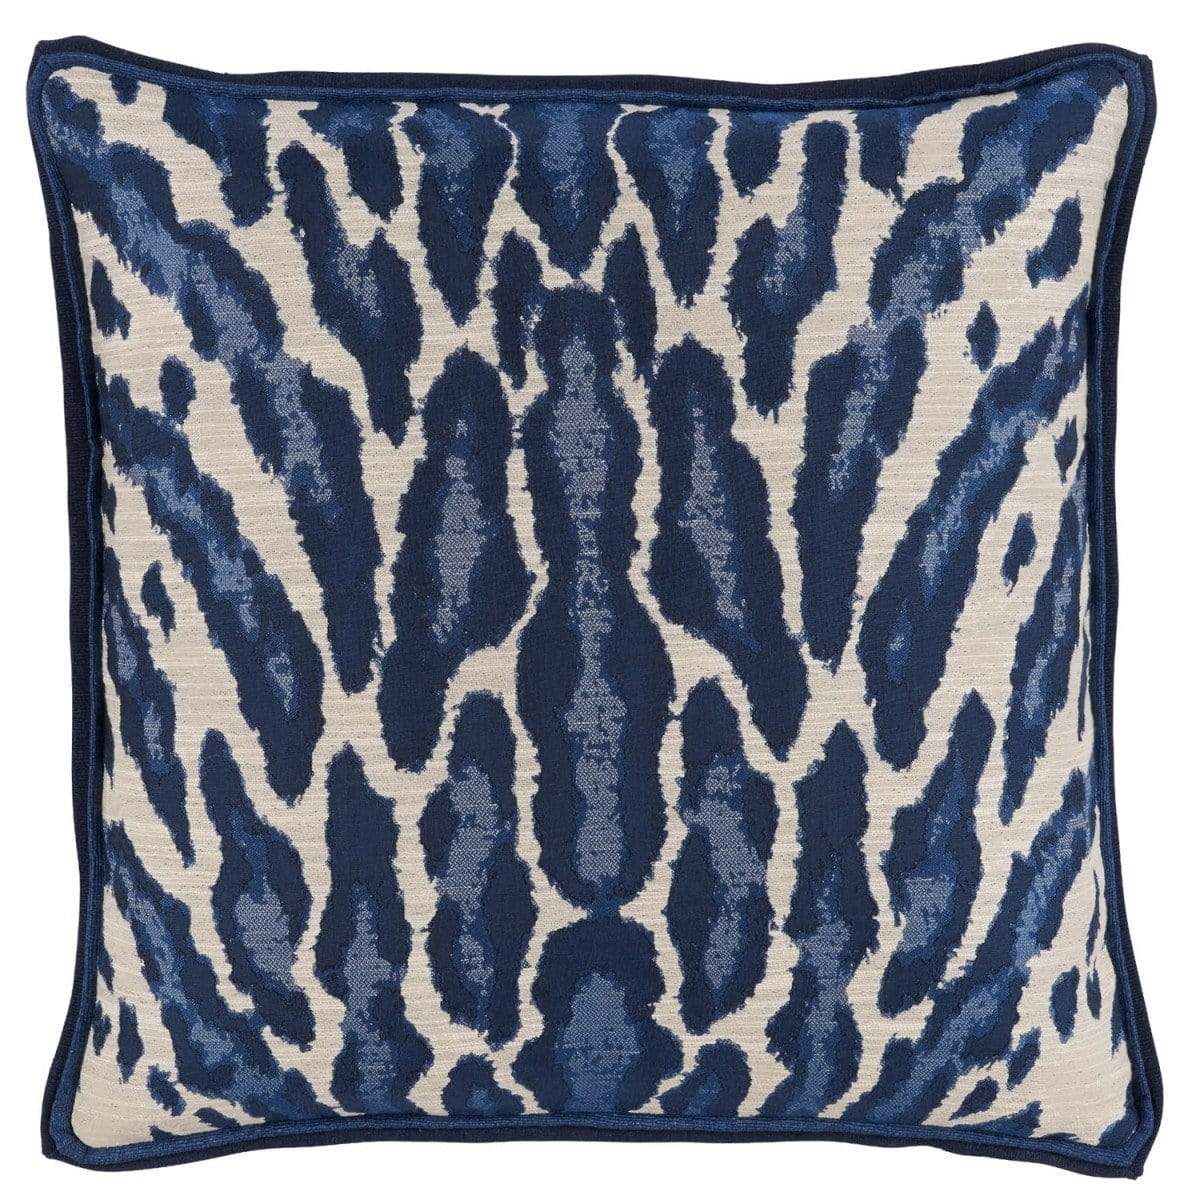 Lacefield Designs Kenya Indigo Animal Print Pillow Pillow & Decor Lacefield-D1079